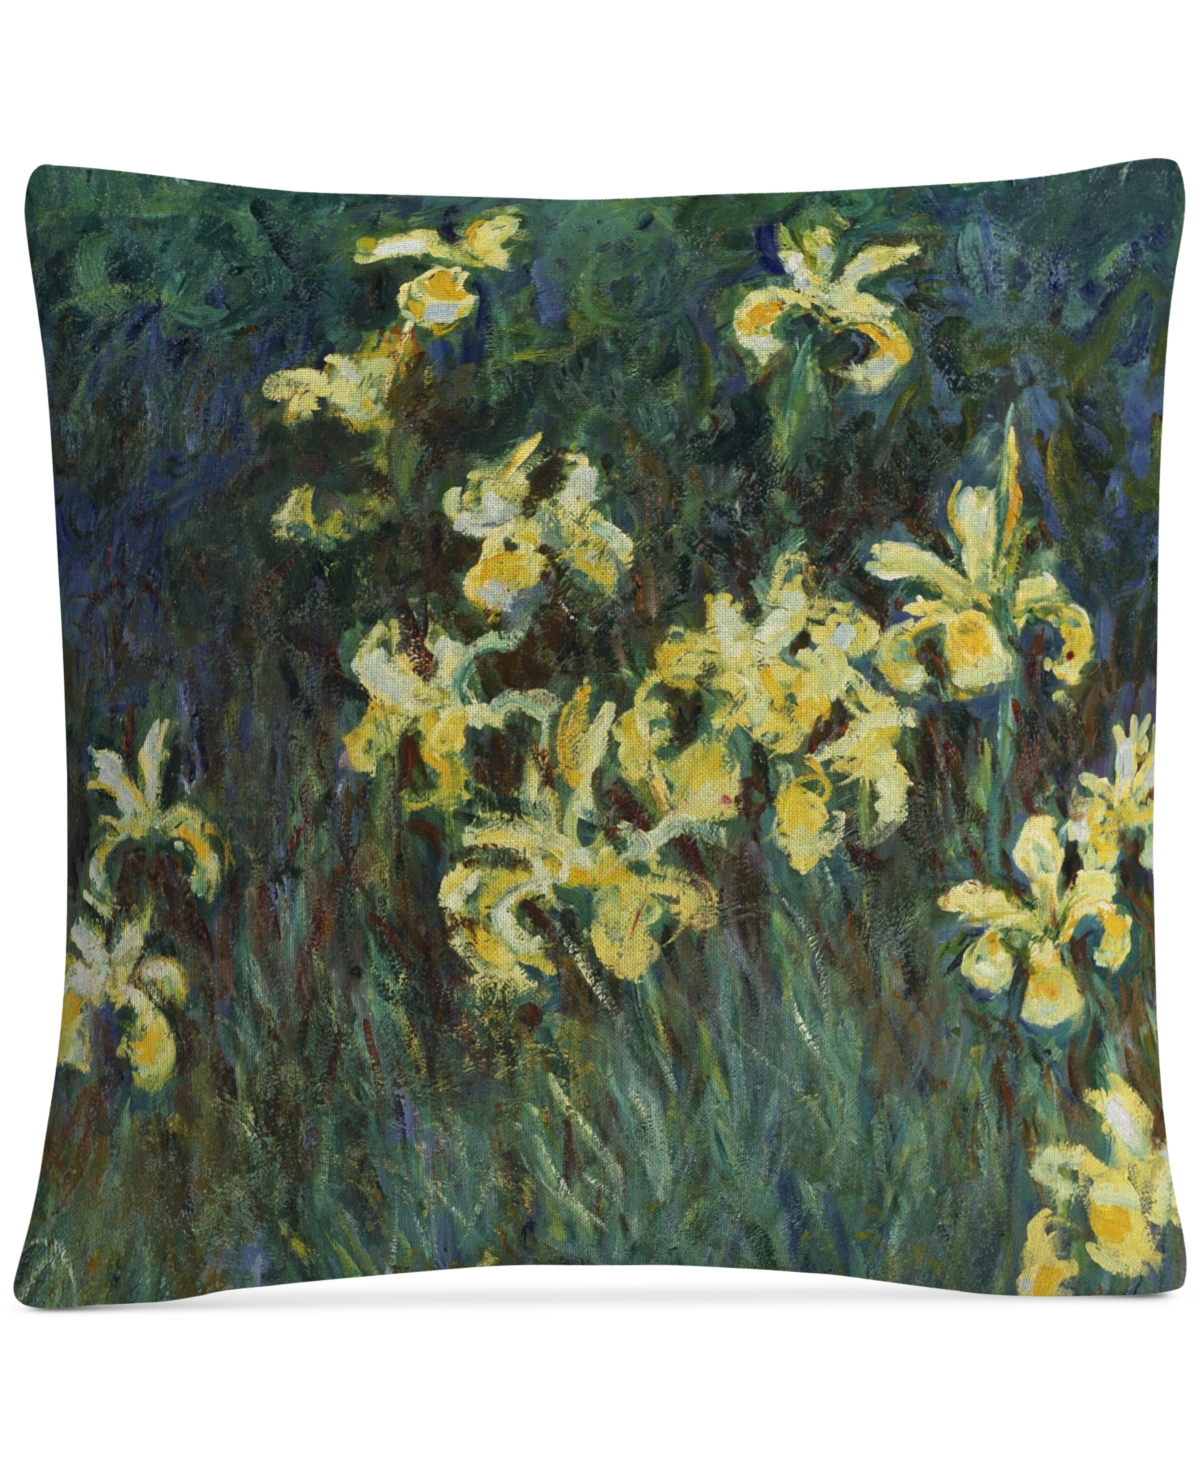 Claude Monet The Yellow Irises Decorative Pillow, 16 x 16